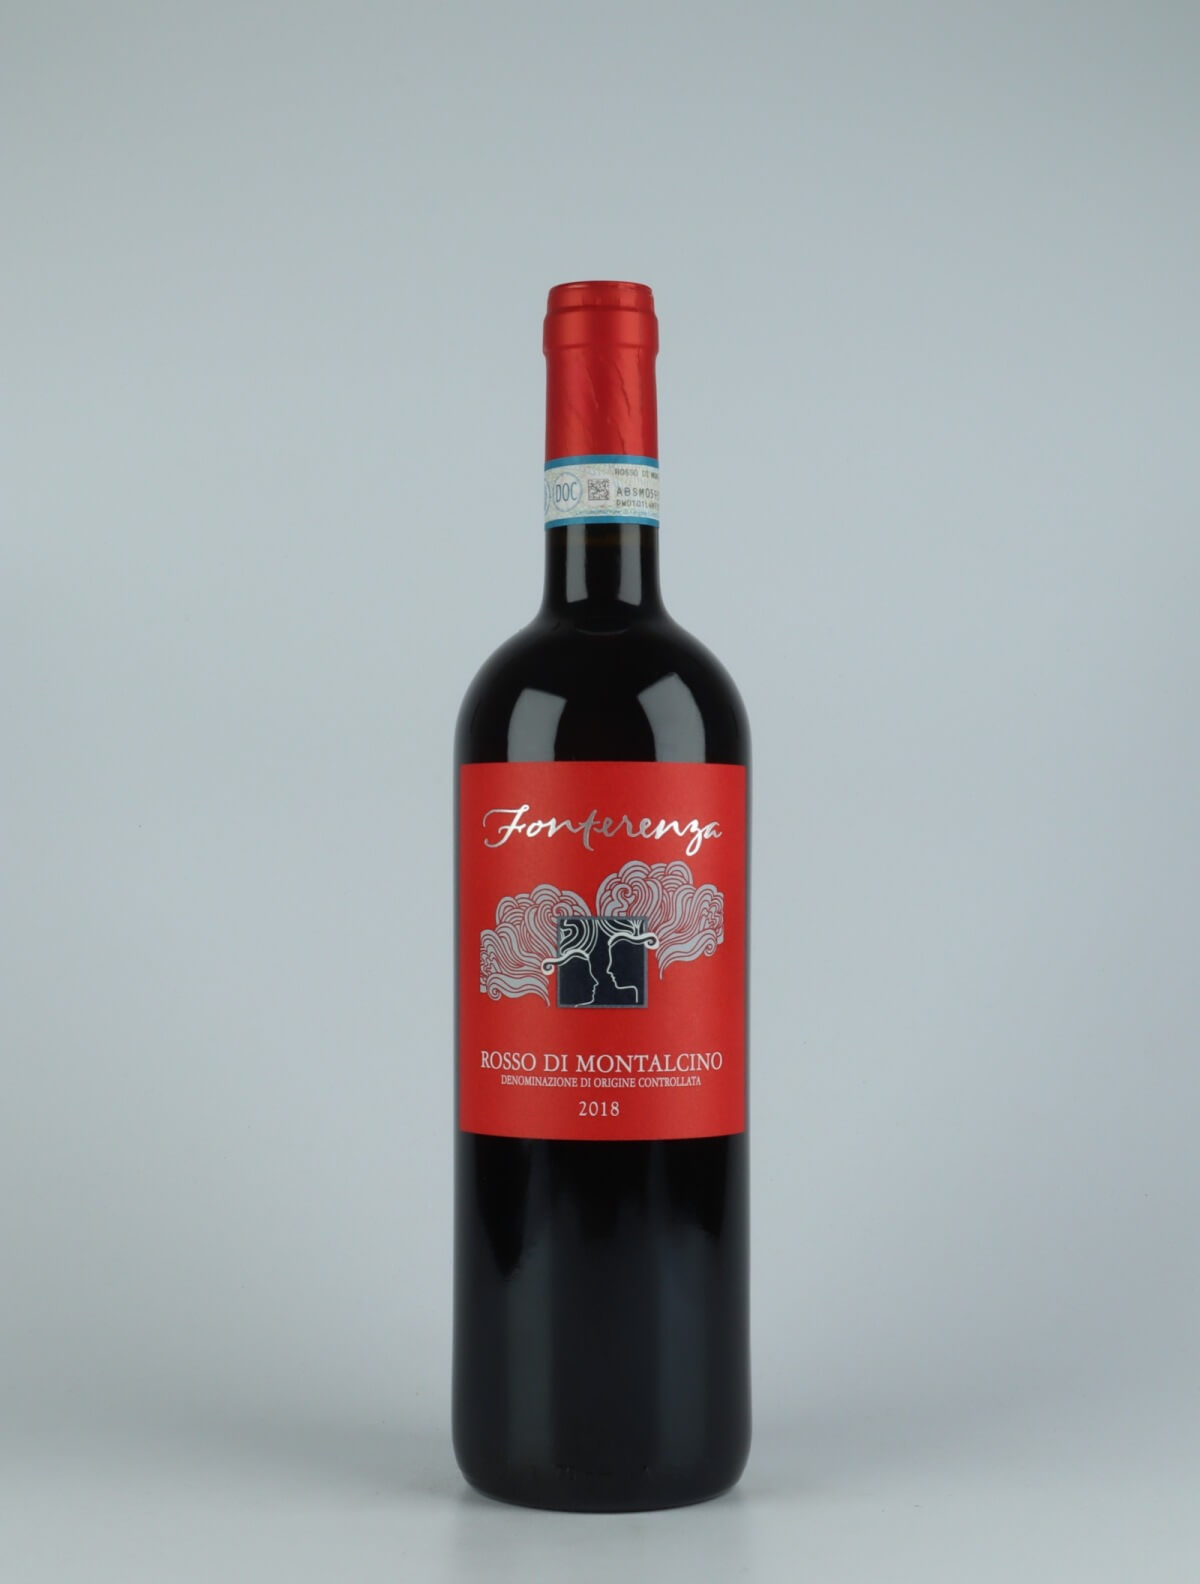 En flaske 2018 Rosso di Montalcino Rødvin fra Fonterenza, Toscana i Italien